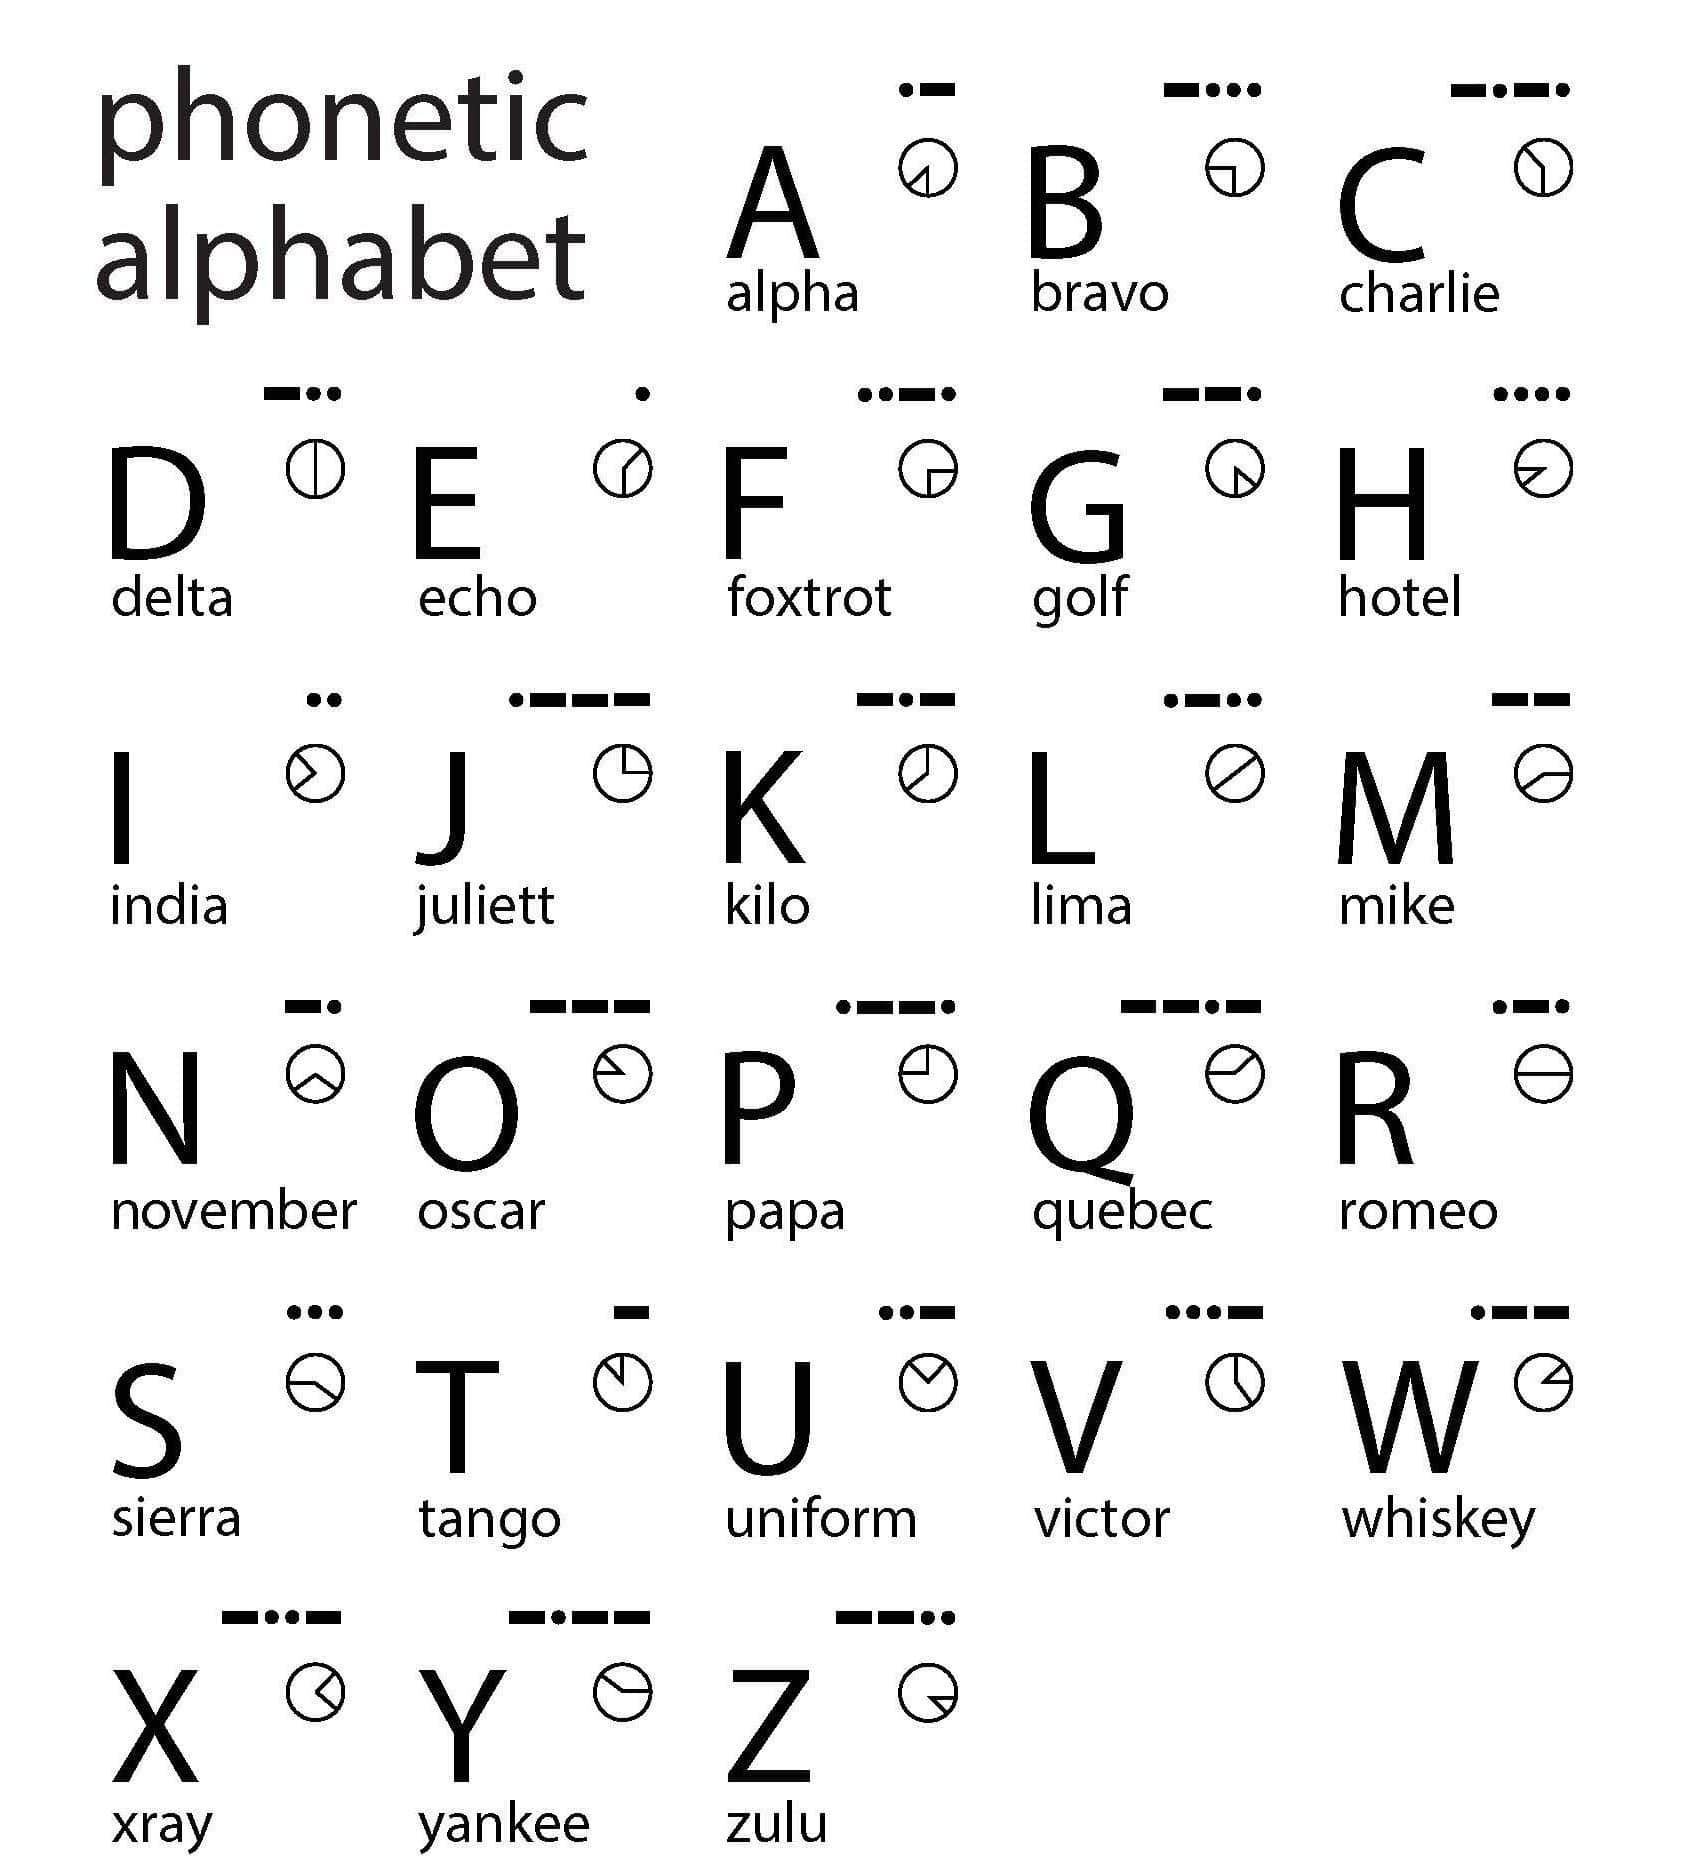 military-alphabet-symbol-quote-images-hd-free